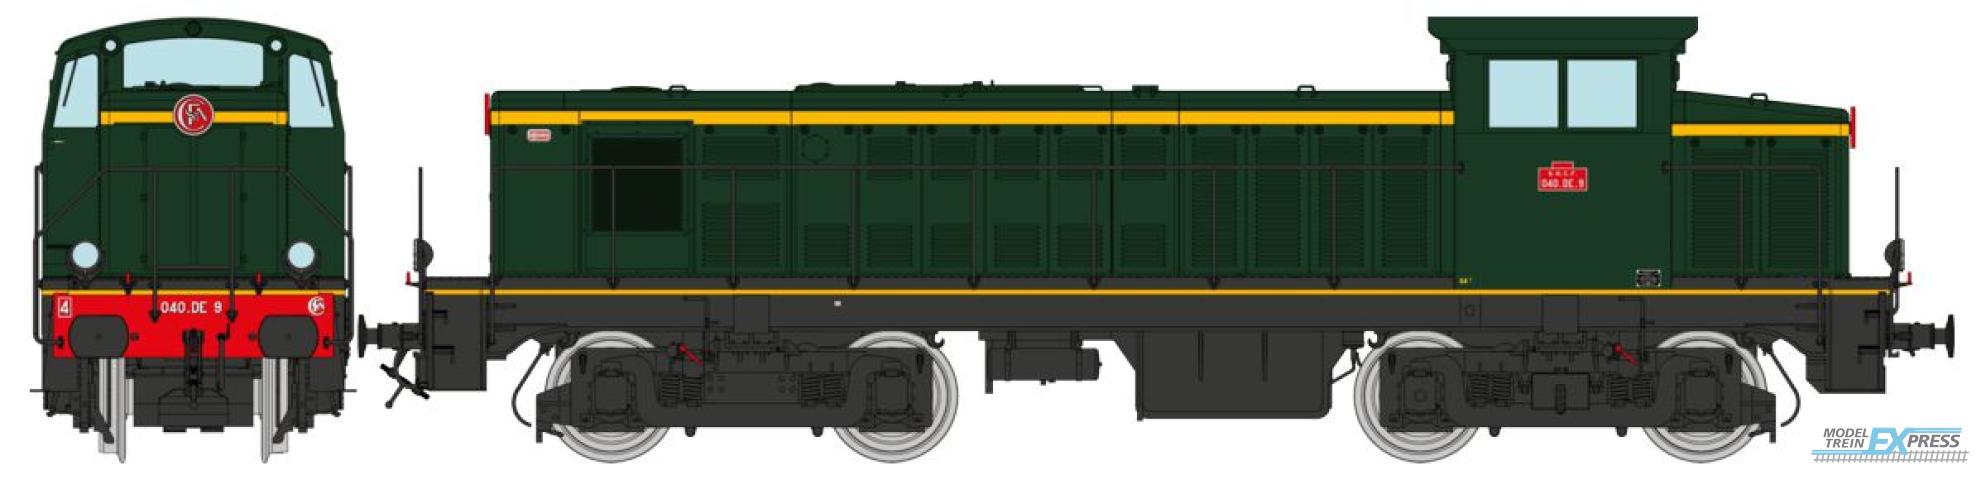 REE models JM-013 Diesel Locomotive 040 DE 09 origin, with rail grafts, région South West, Era III - ANALOG